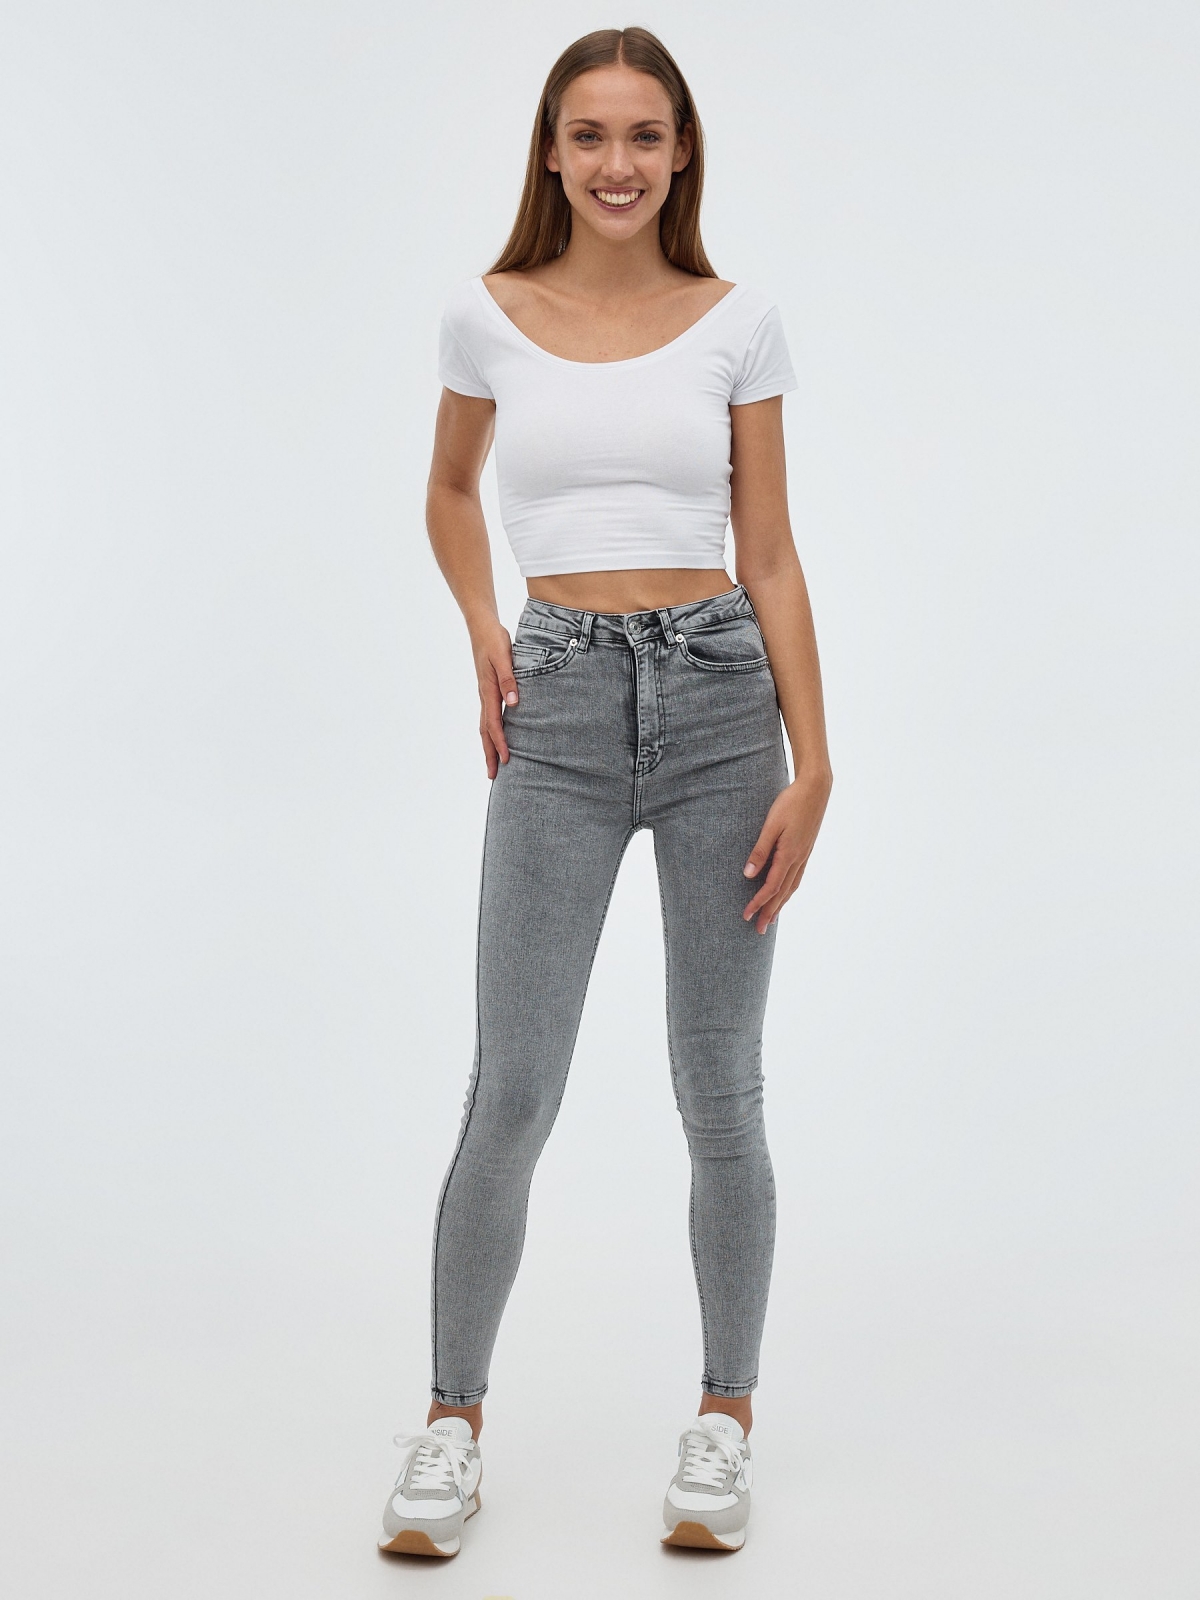 Grey skinny jeans medium grey front view